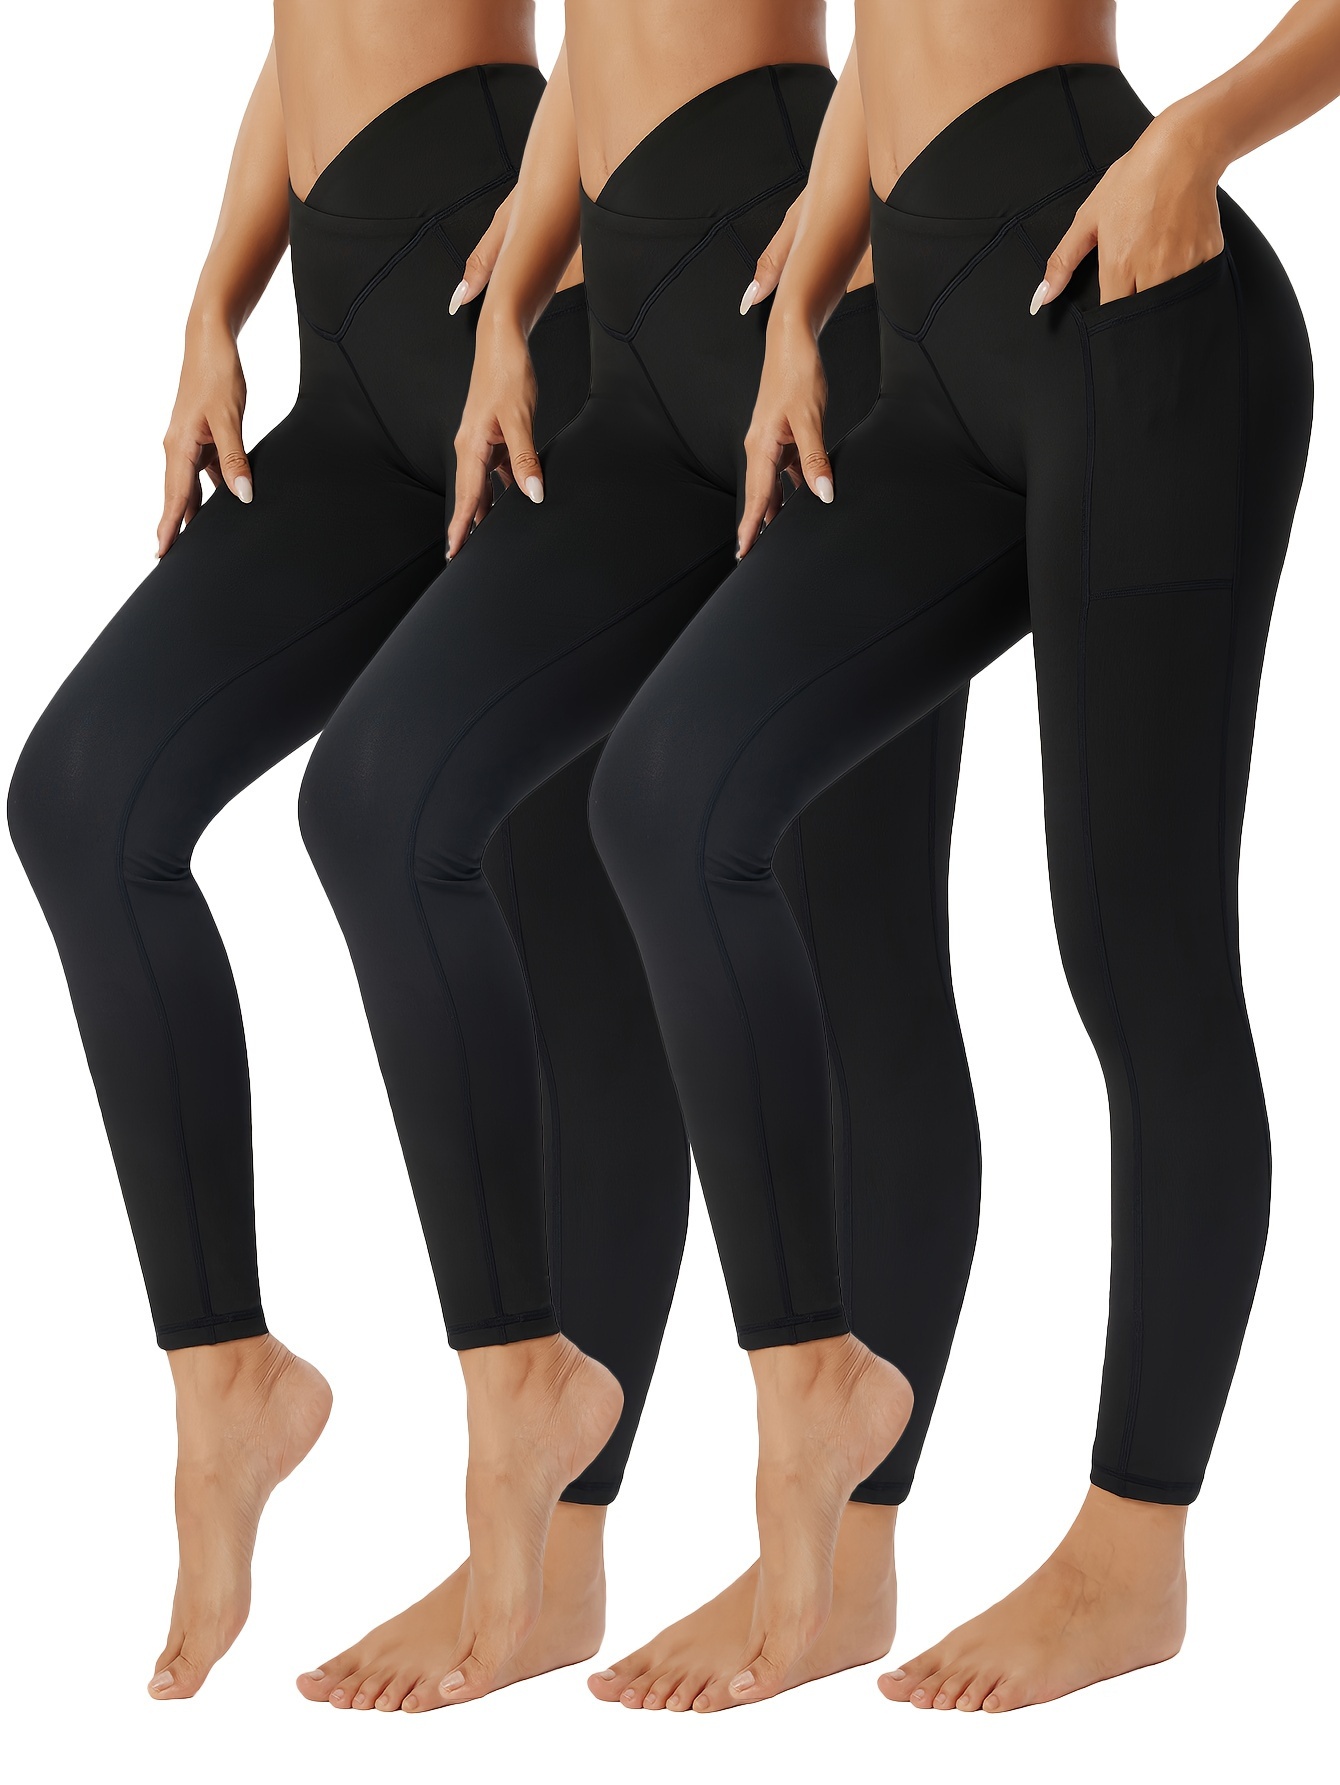 Hfyihgf V Cross Waist Leggings for Women Tummy Control Soft Workout Running  High Waisted Non See-Through Yoga Pants(Purple,L) 